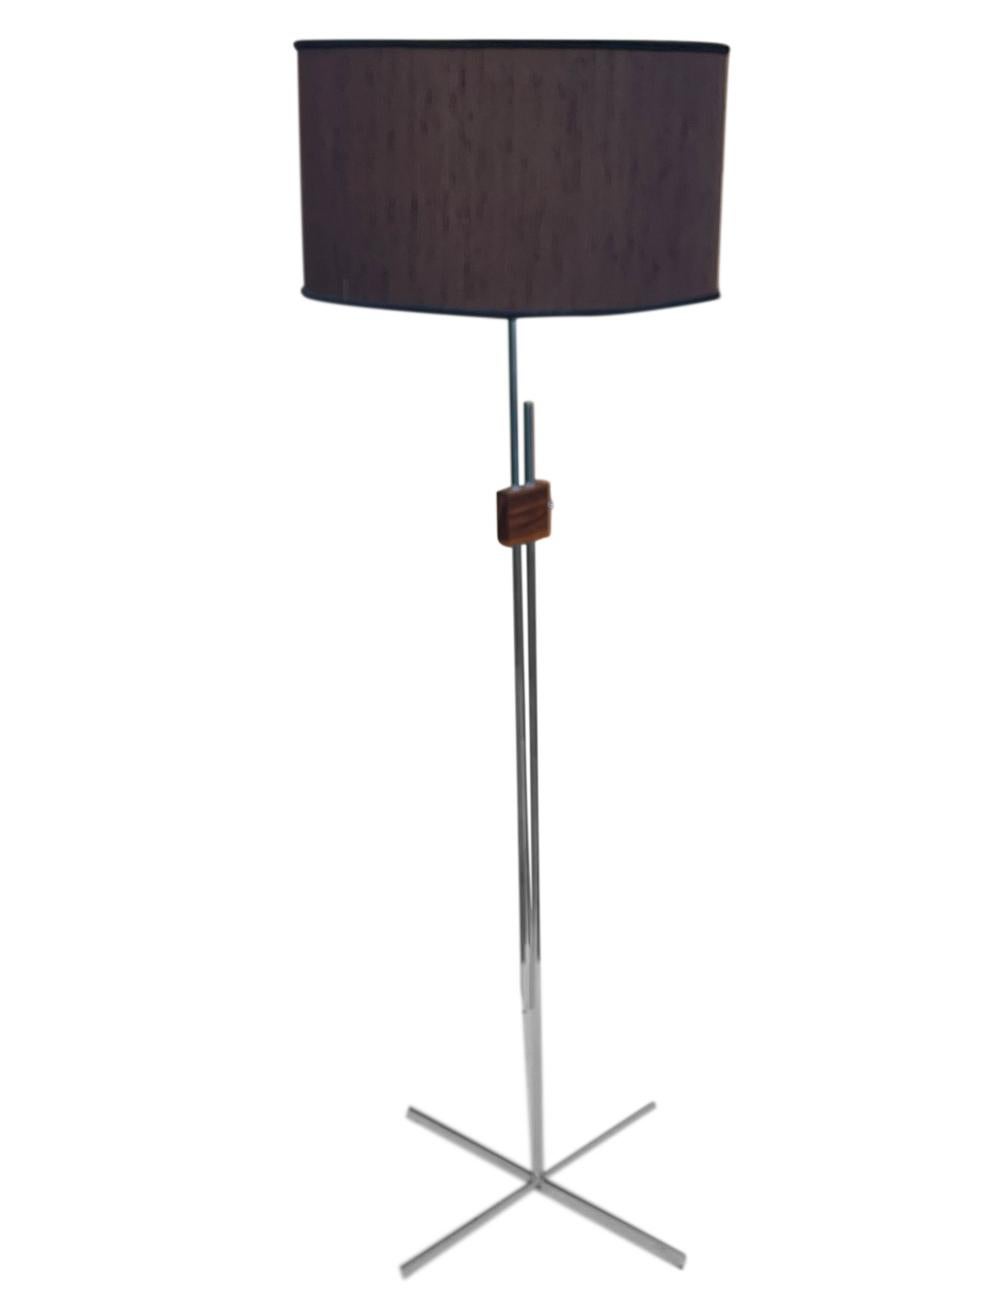 Scandinavian Modern Mid Century Danish Modern Adjustable Height Floor Lamp in Rosewood & Chrome For Sale